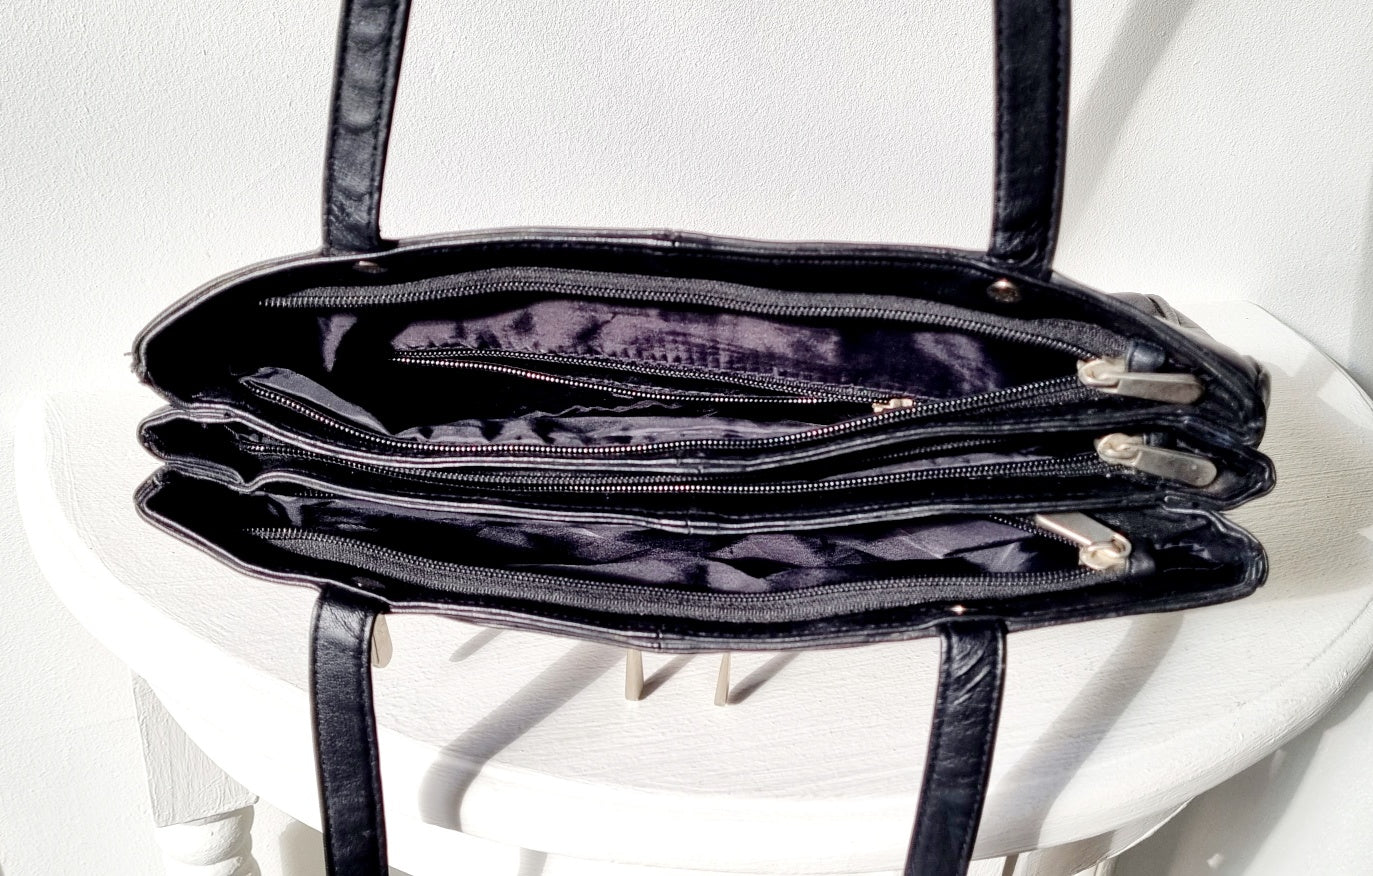 No Brand - Black Leather Tote Bag